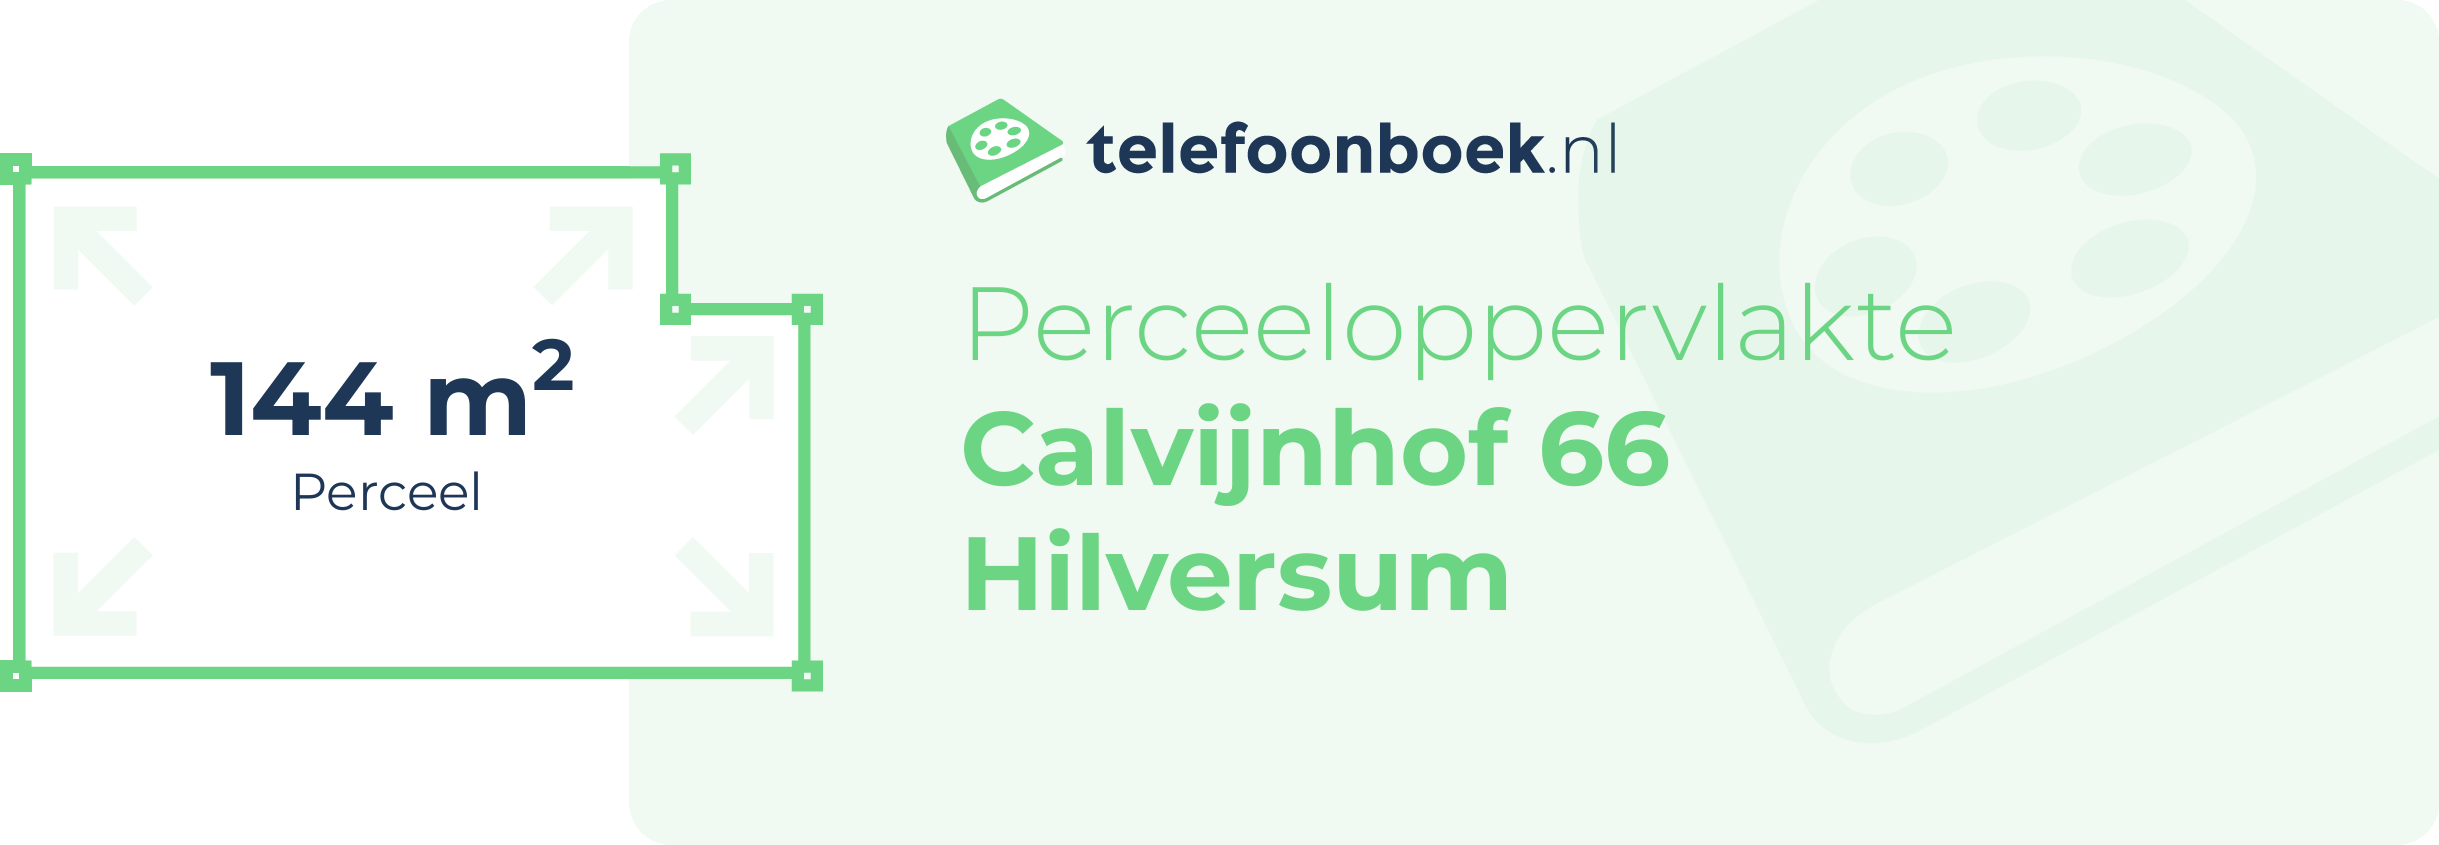 Perceeloppervlakte Calvijnhof 66 Hilversum